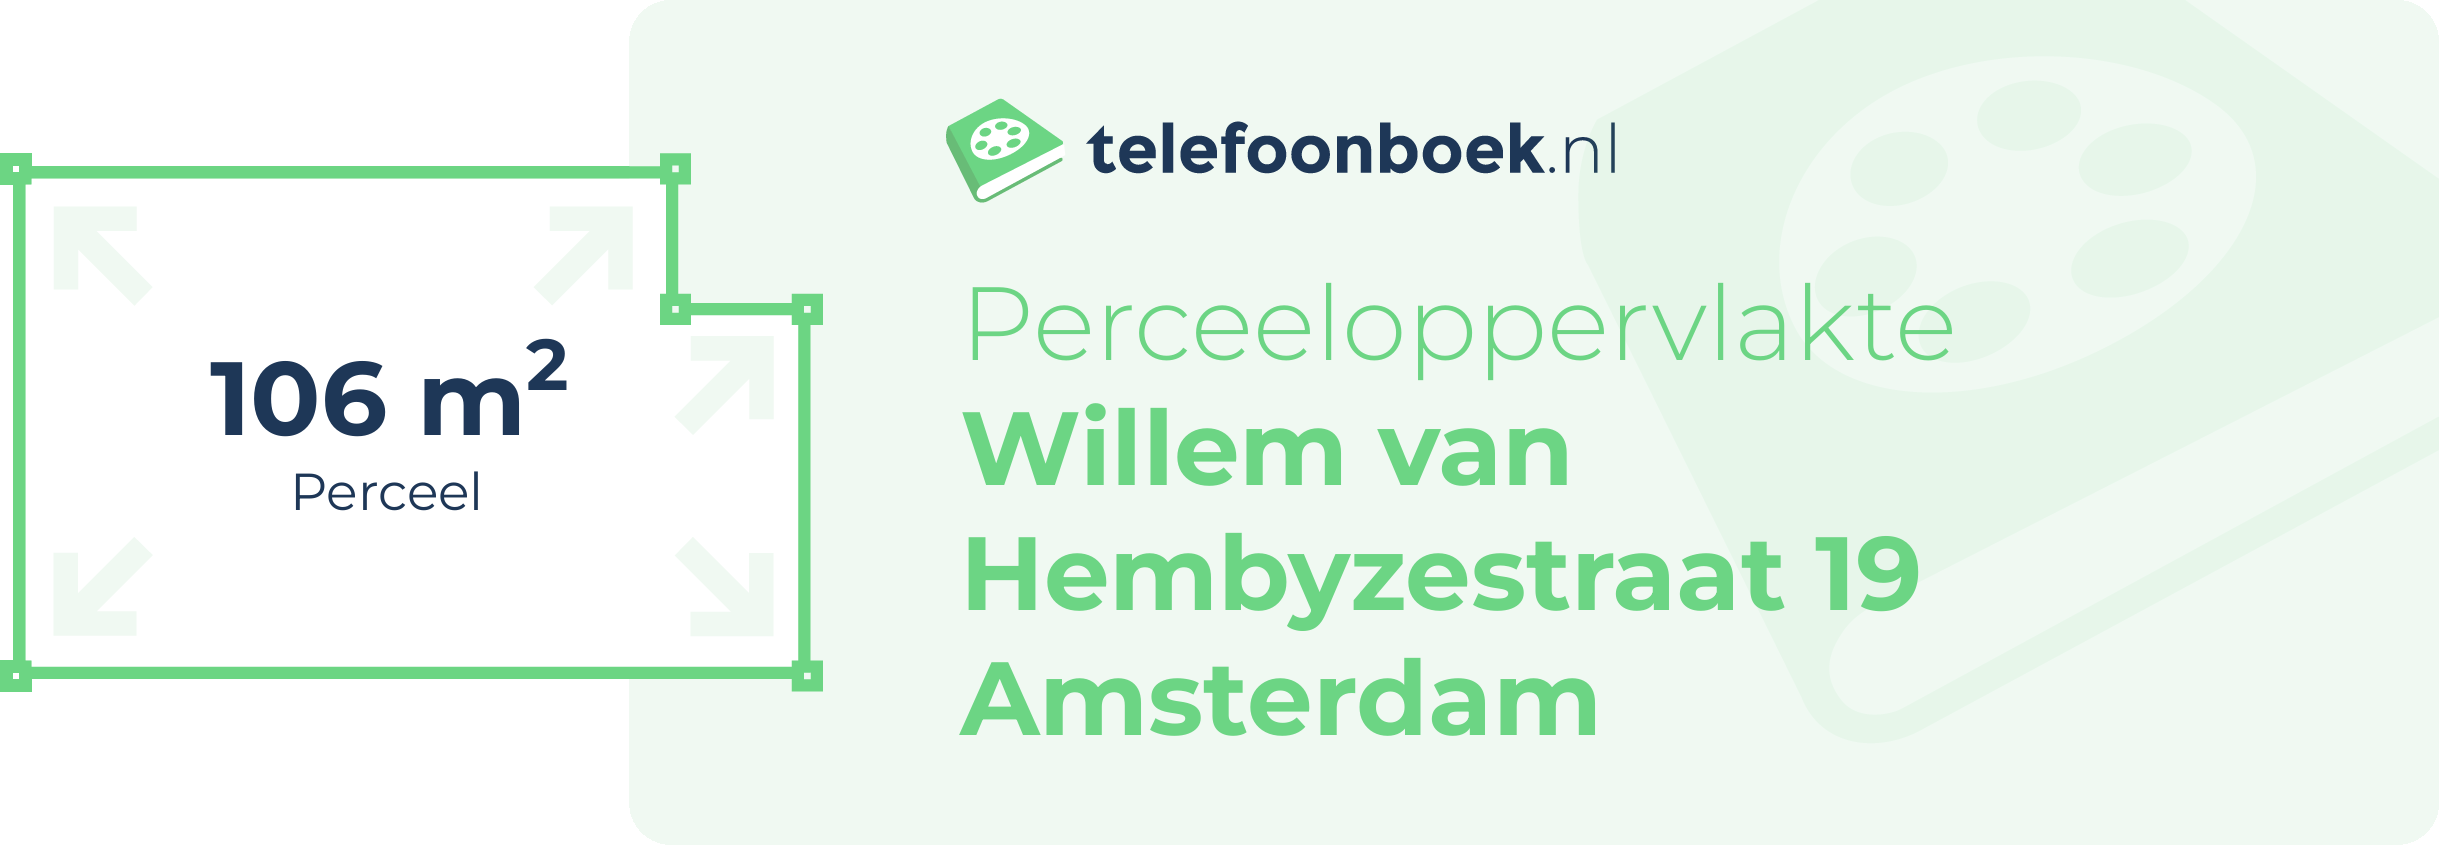 Perceeloppervlakte Willem Van Hembyzestraat 19 Amsterdam